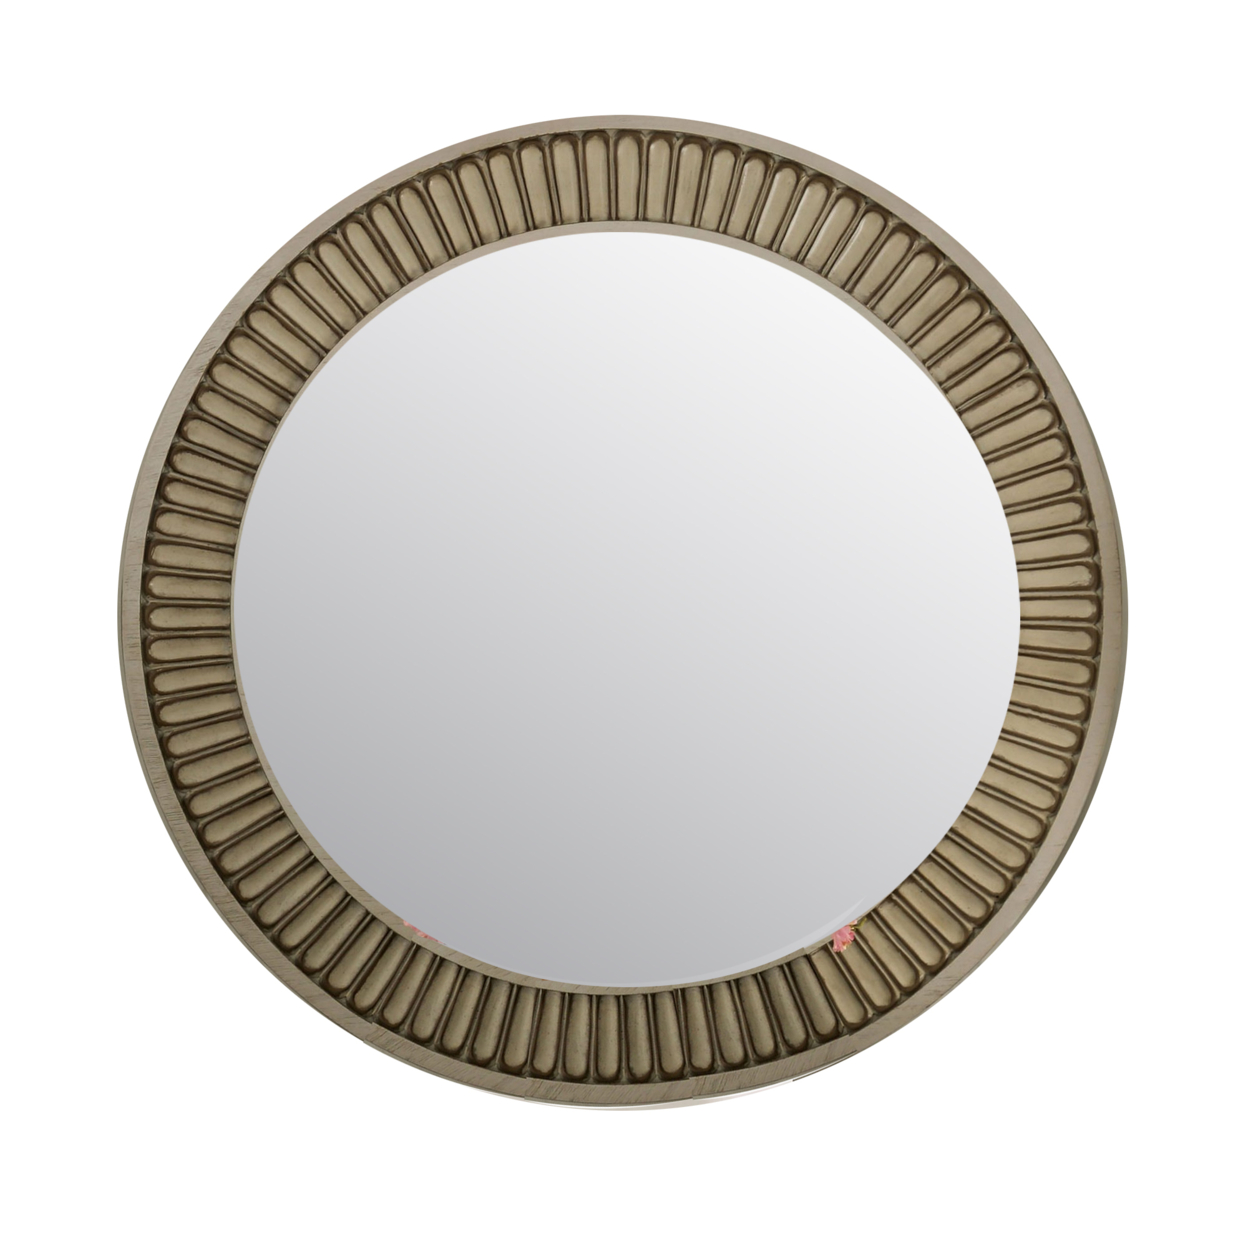 Traditional Style Round Mirror With Decorative Trim Edges, White- Saltoro Sherpi